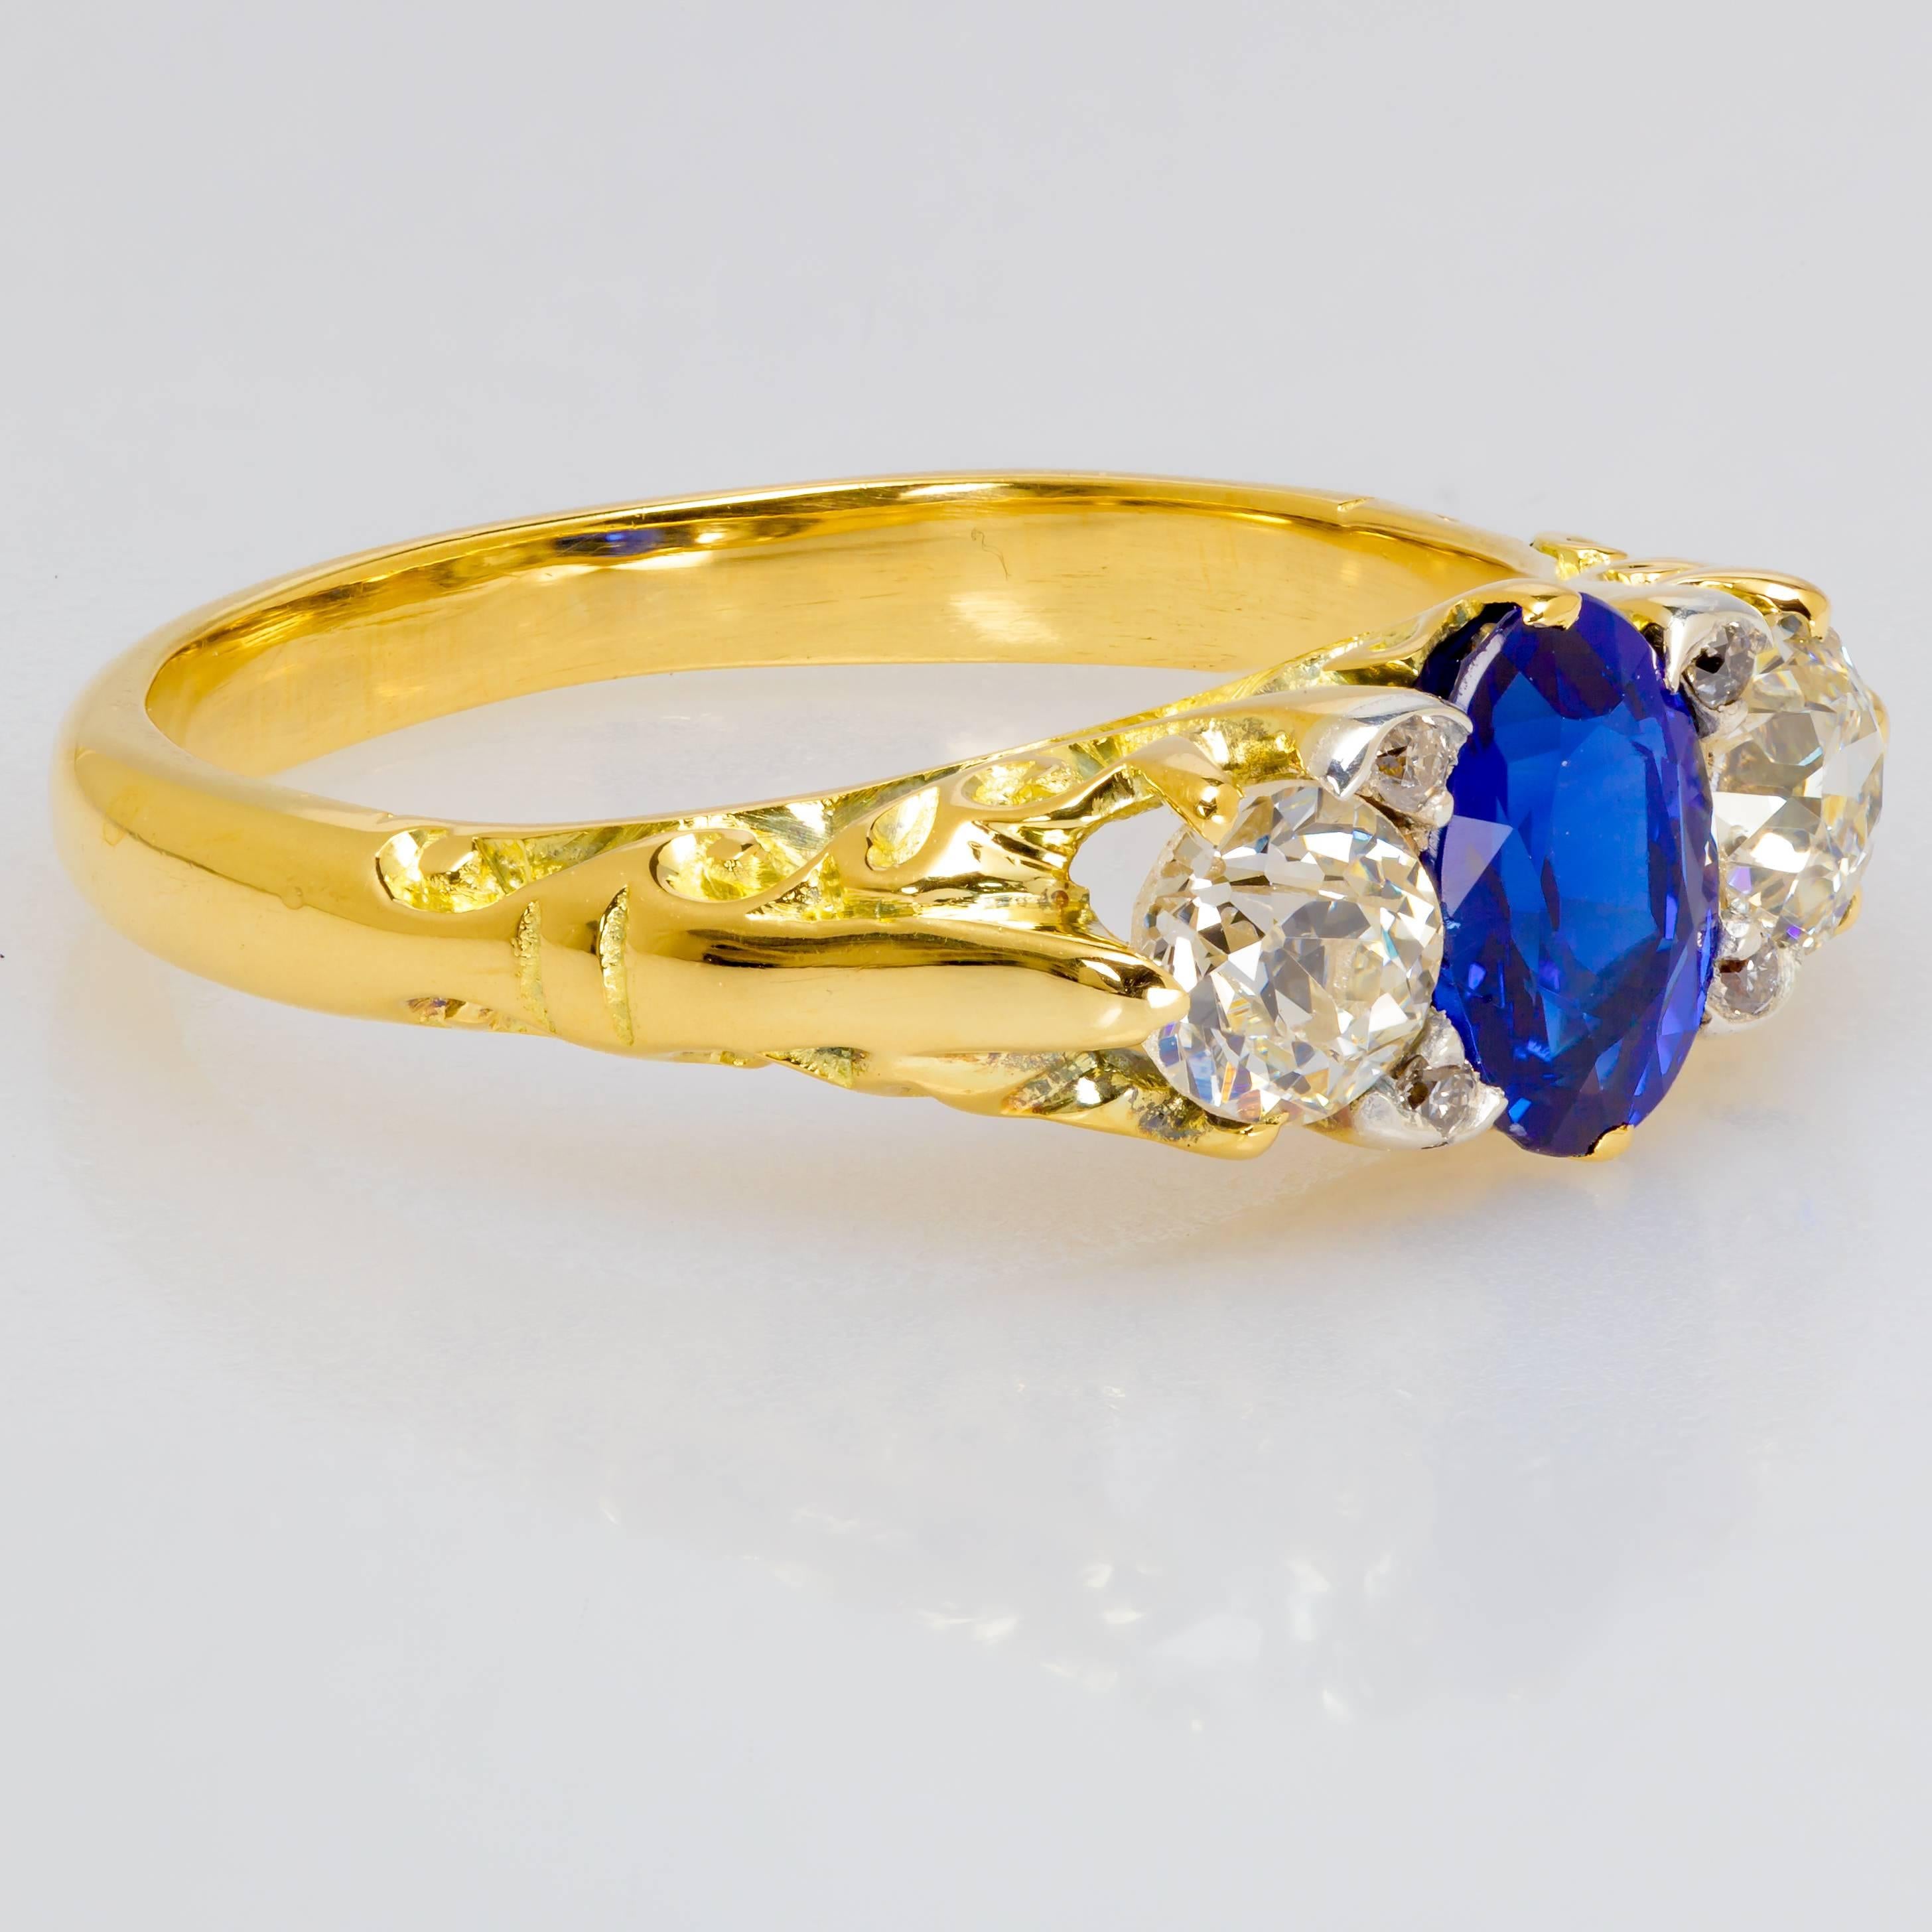 Women's Custom-Designed 1.00 ct. Sapphire, Diamond & 18k Yellow Gold Ring For Sale